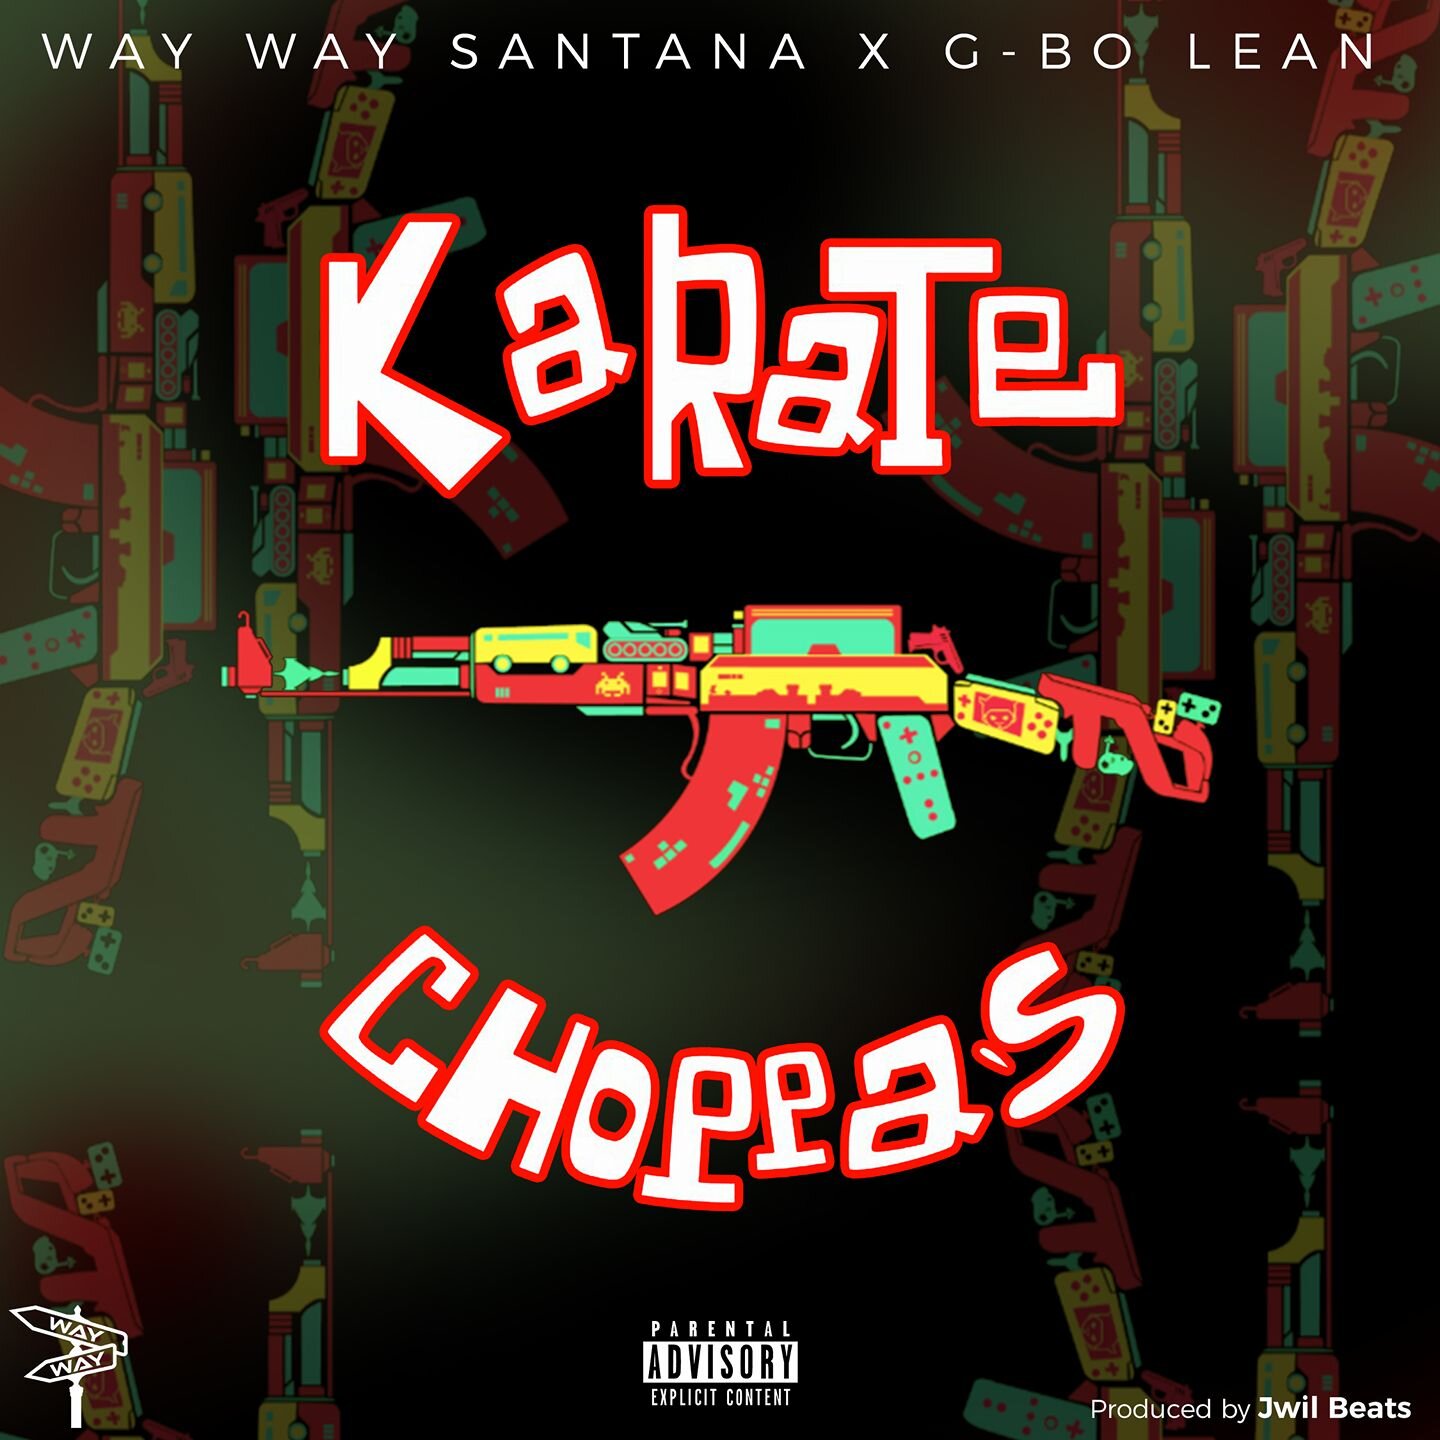    0:  Way Way Santana x G-Bo Lean "Karate Choppa's" 